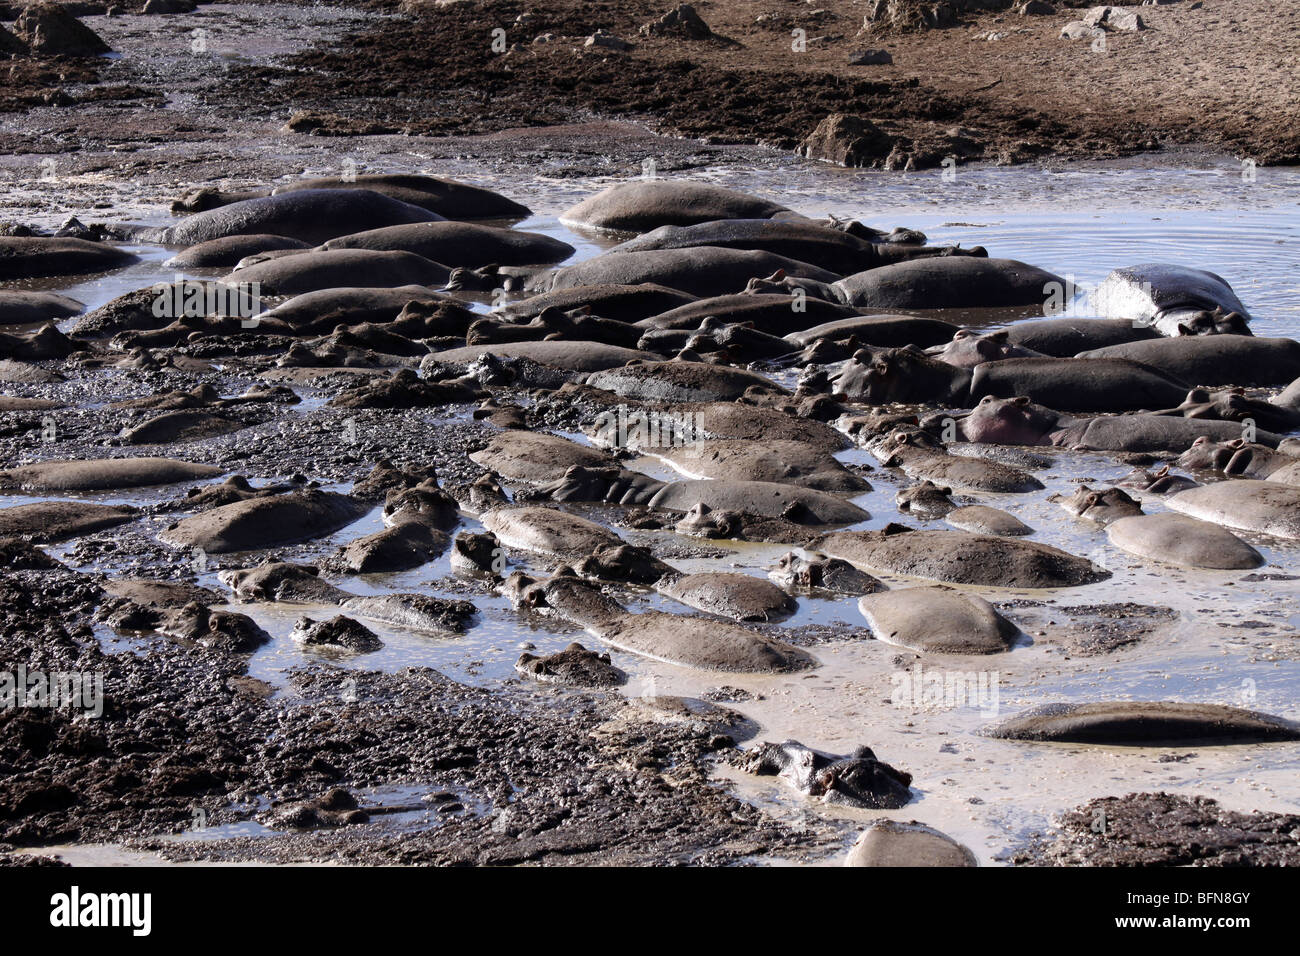 Group Of Hippopotamus Hippopotamus amphibius Wallowing In Mud Taken In The Serengeti NP, Tanzania Stock Photo